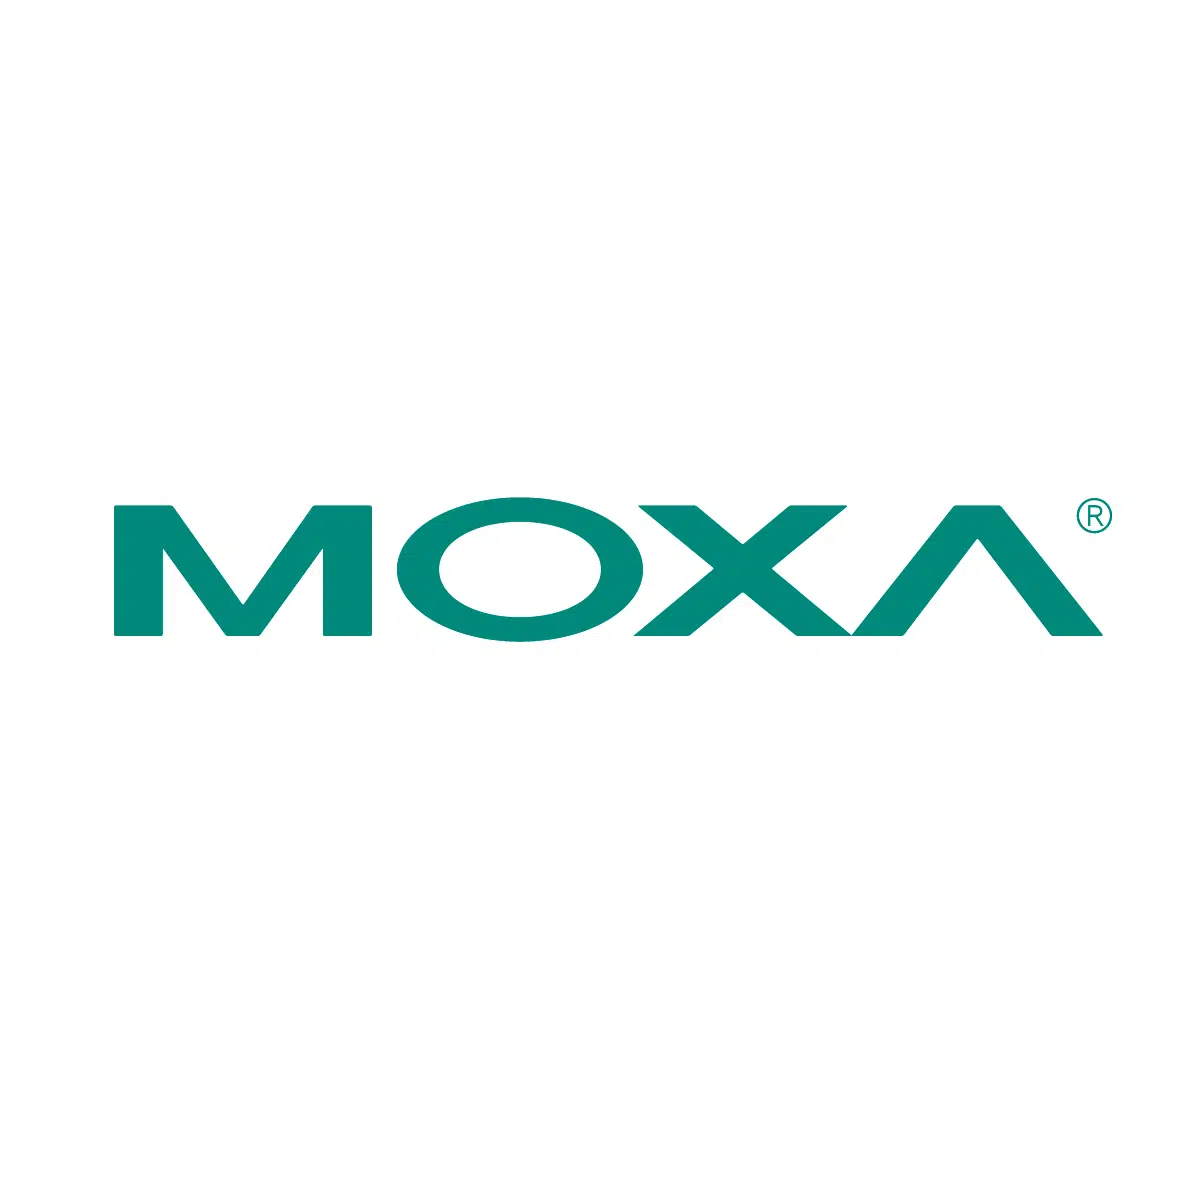 moxa nport critical vulnerabilities